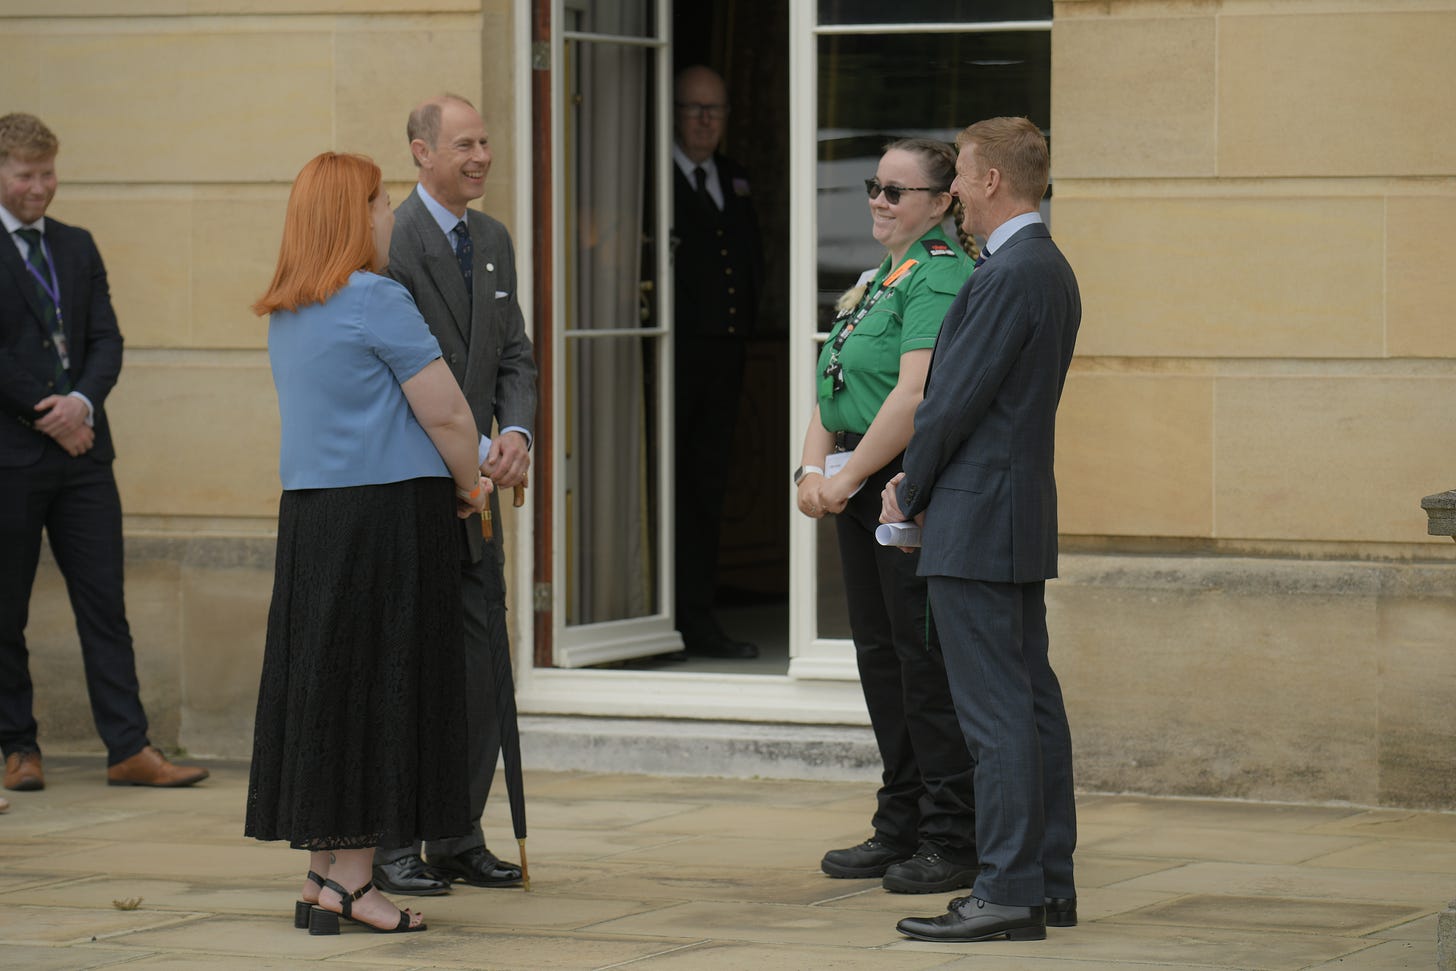 HRH The Duke of Edinburgh, Tim Peake and Hafwen Clarke on West Terrace. Credit Ian Smithers, DofE.